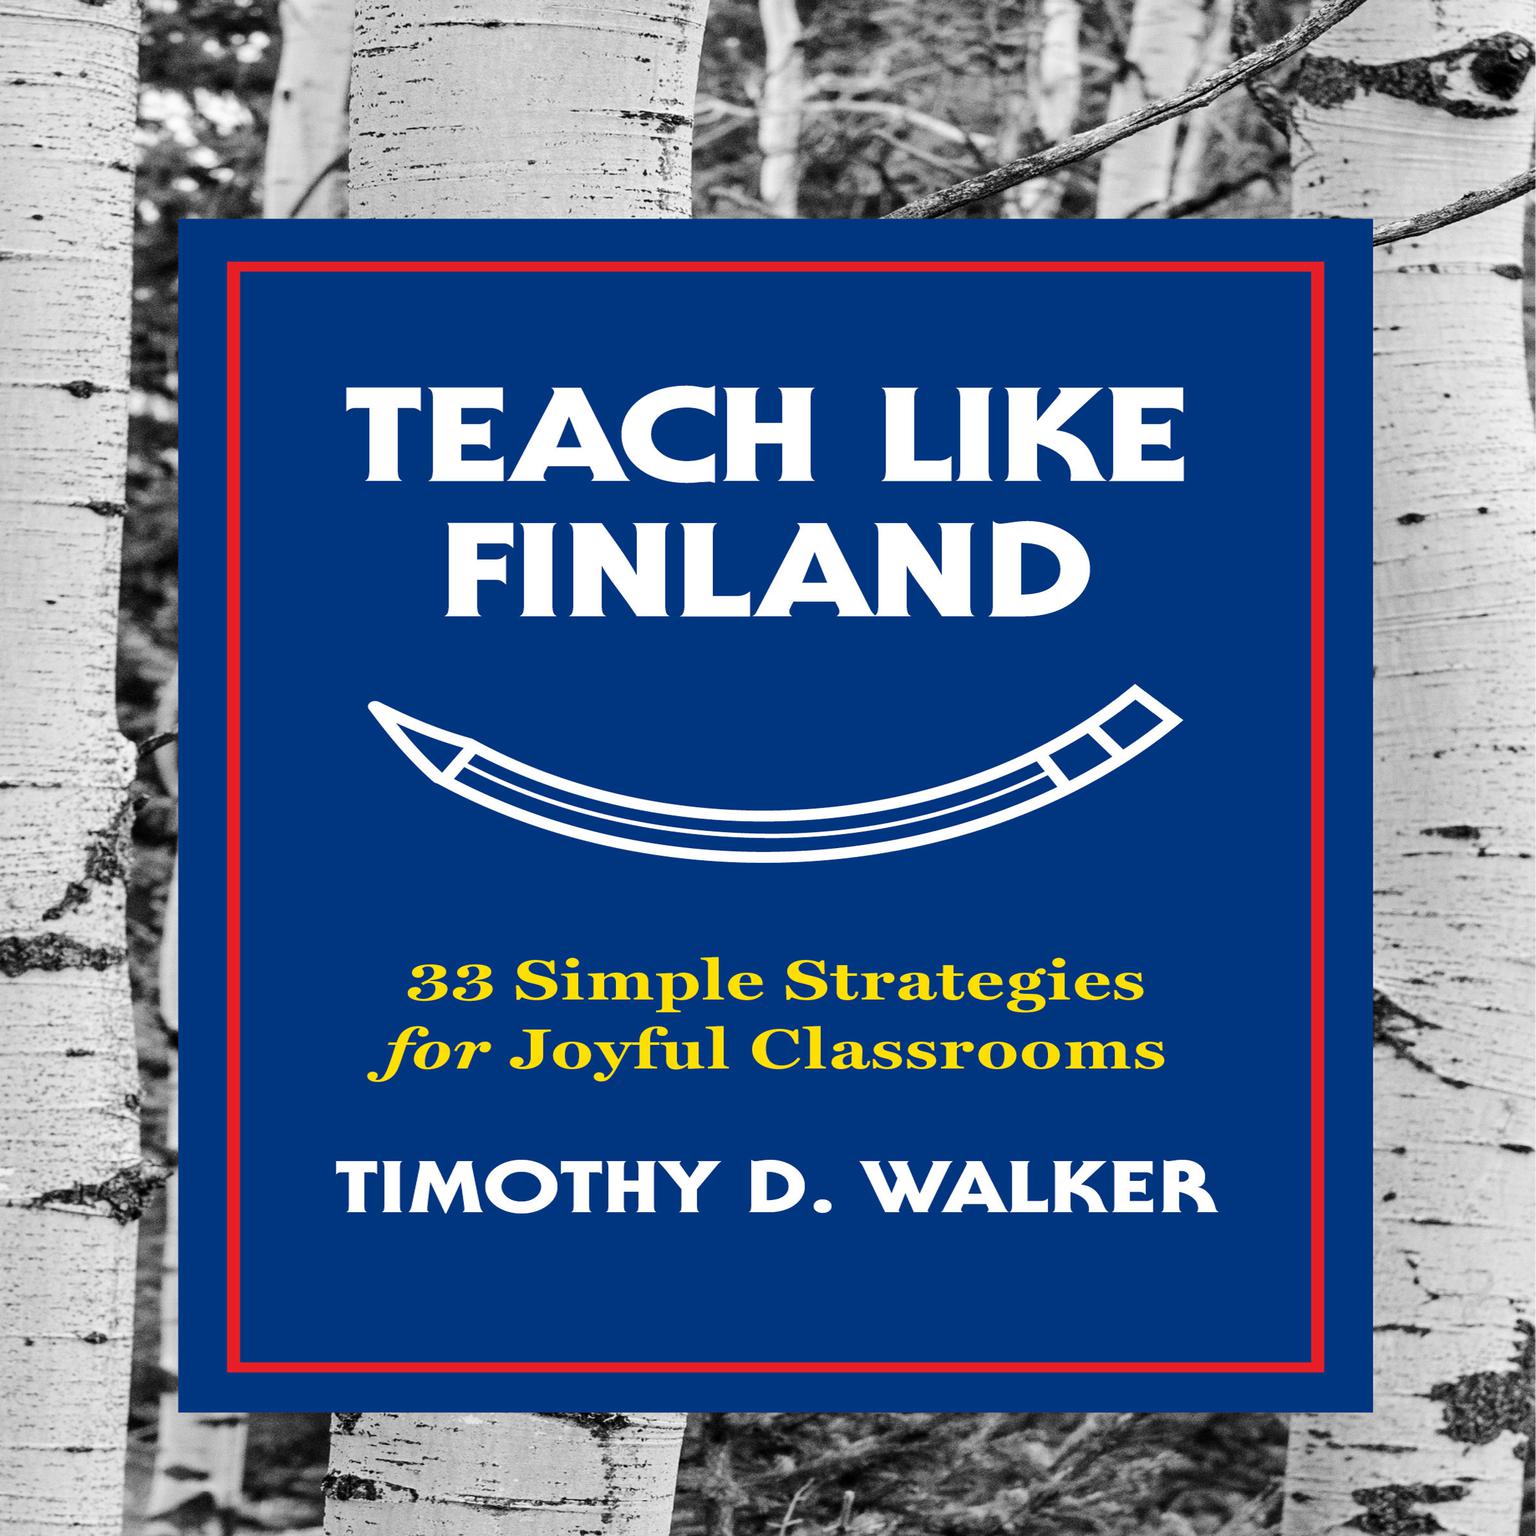 Teach Like Finland: 33 Simple Strategies for Joyful Classrooms Audiobook, by Timothy D. Walker